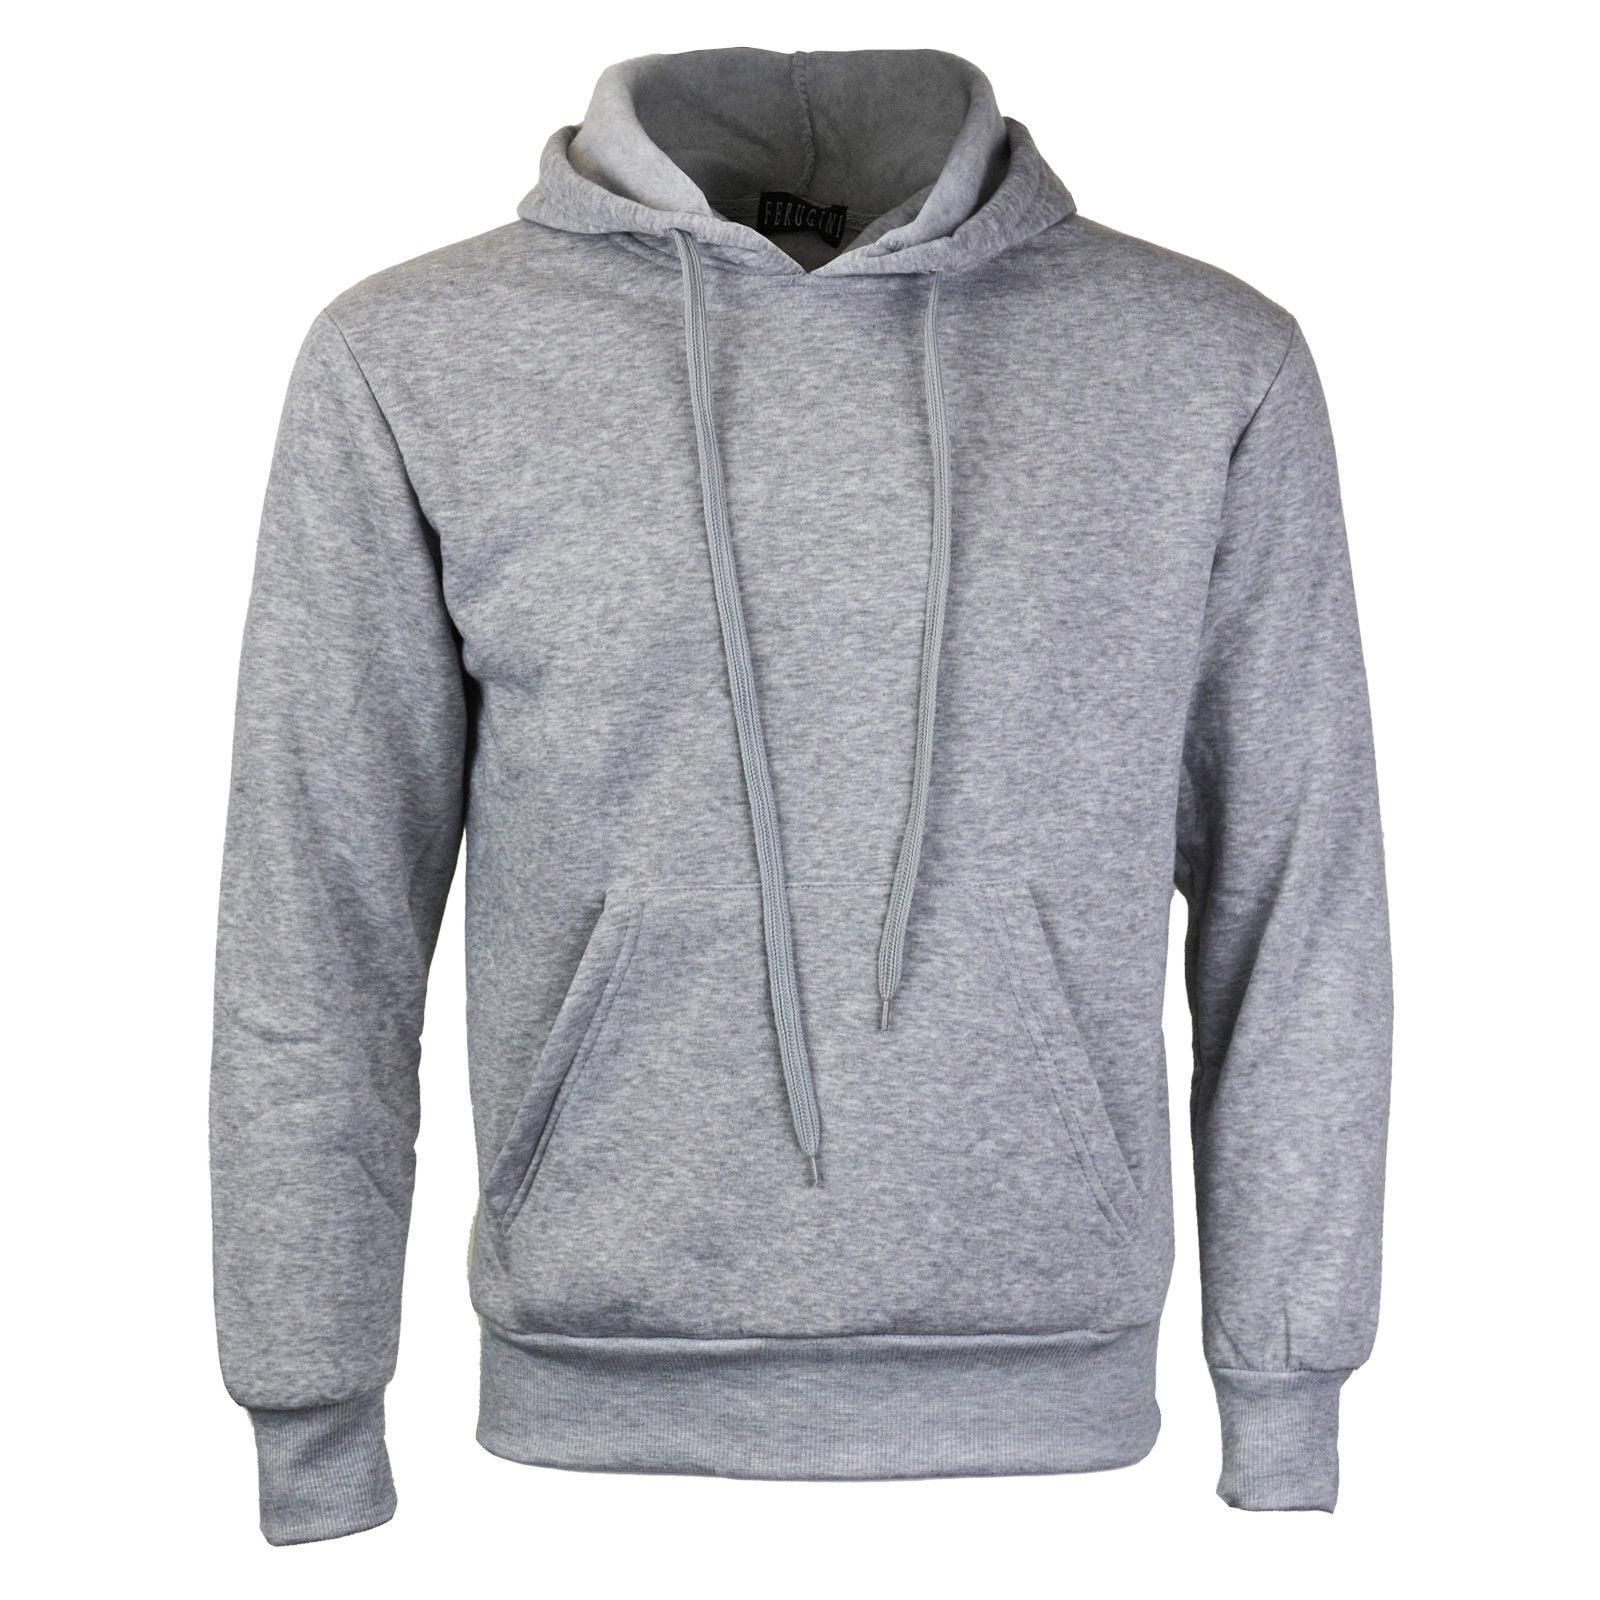 Men's Premium Athletic Drawstring Fleece Lined Sport Gym Sweater ...